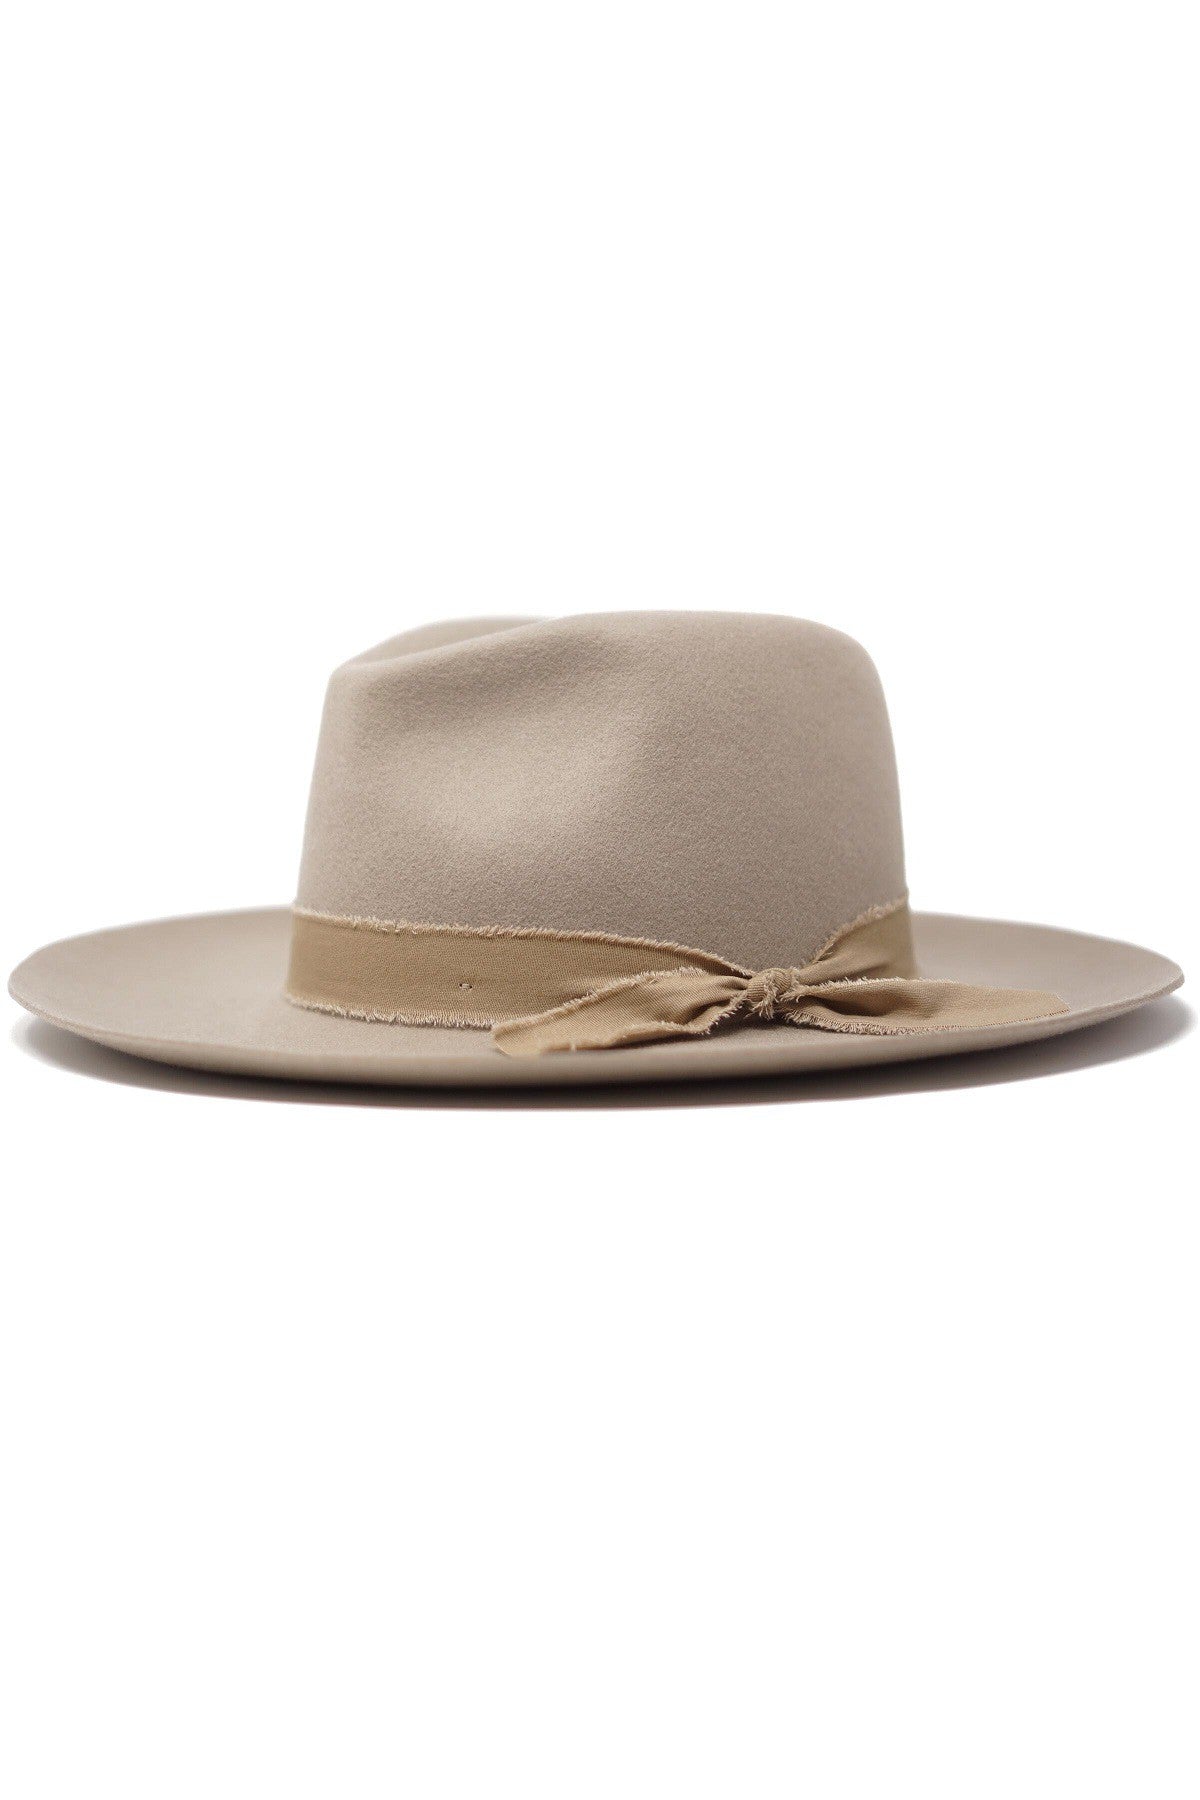 Olive & Pique Wool Felt Panama Hat - Beige